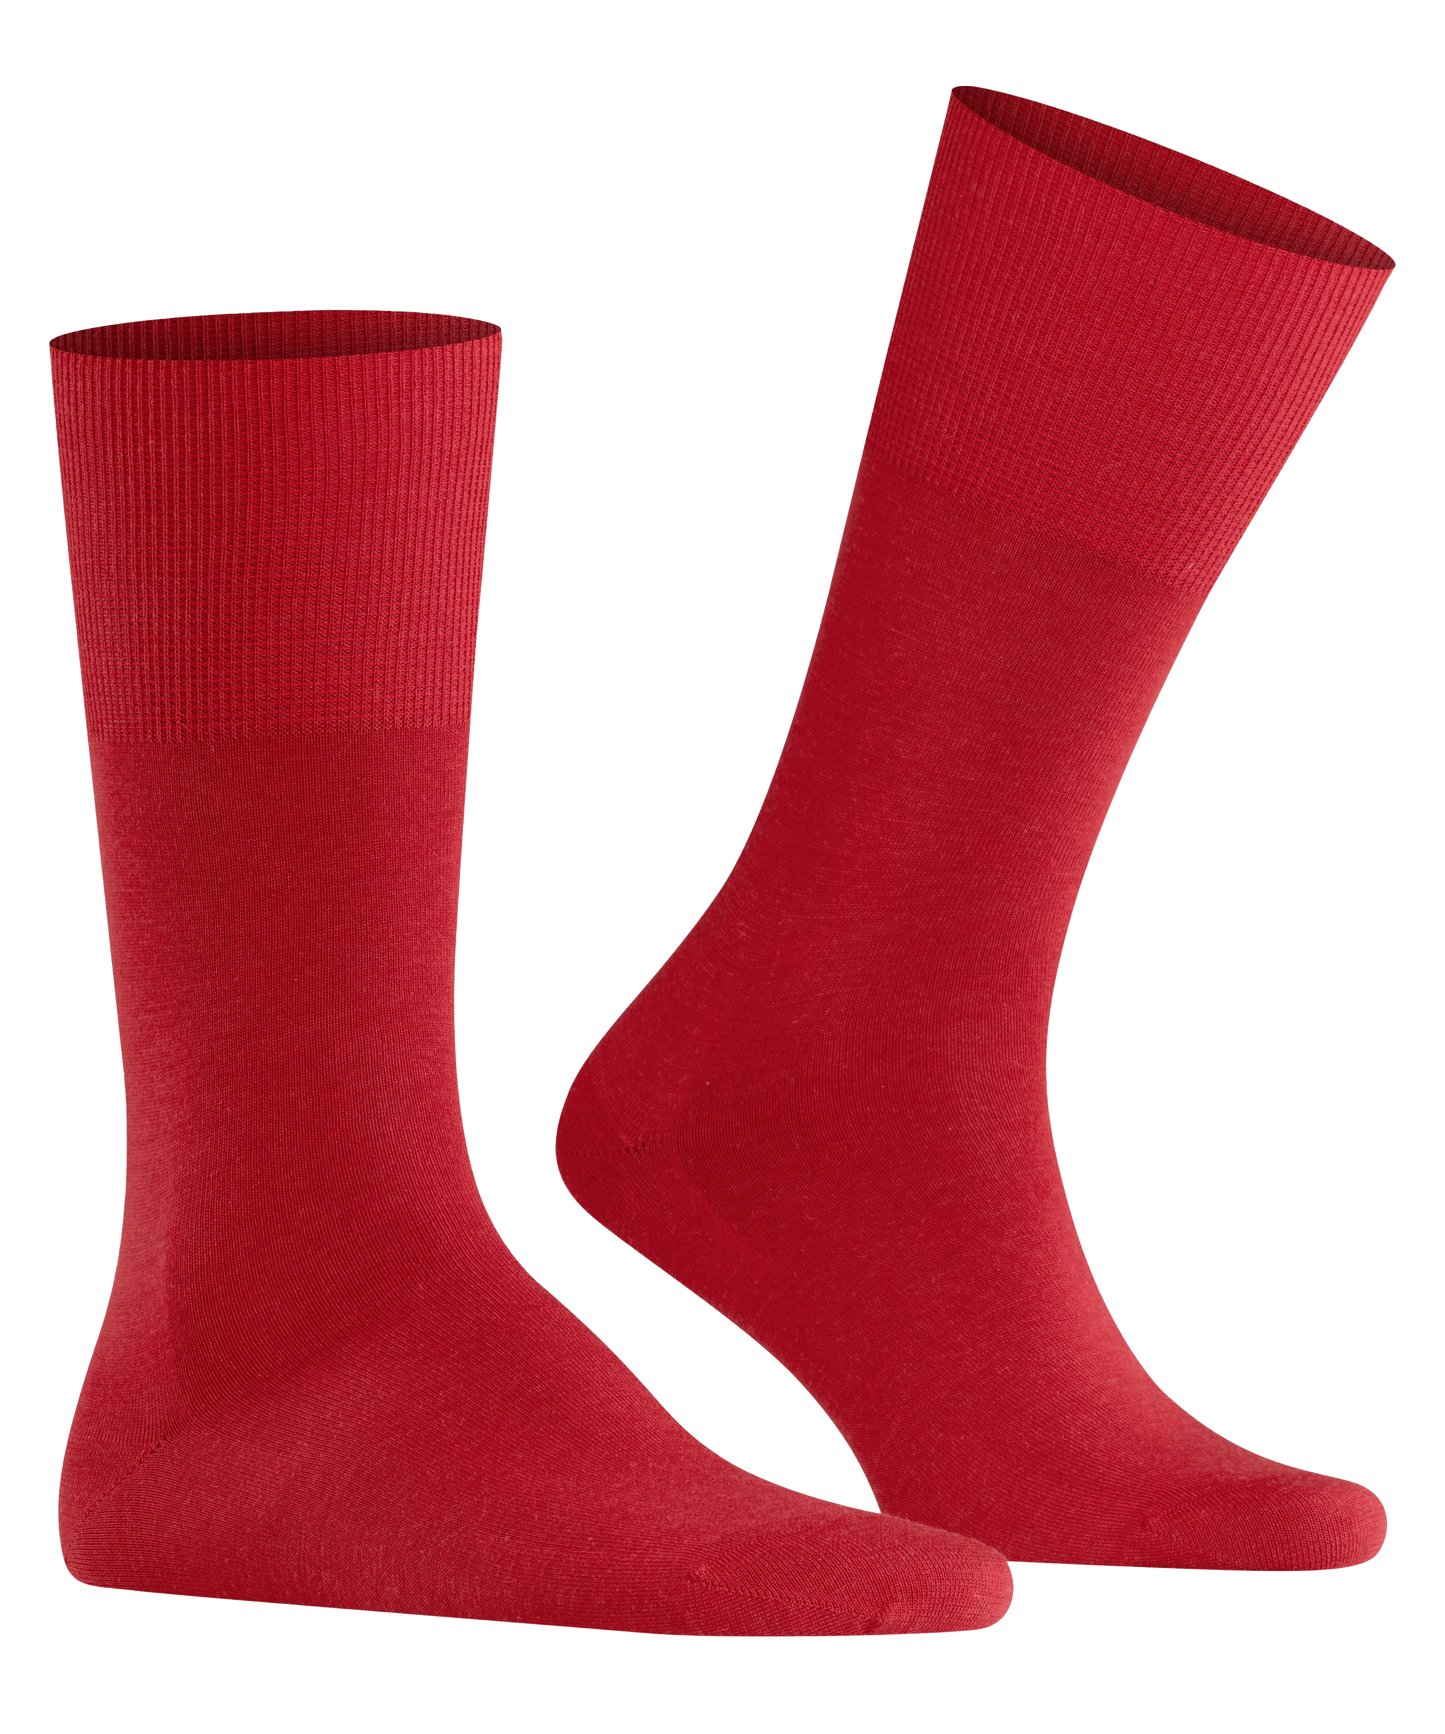 Falke Airport Red Socks